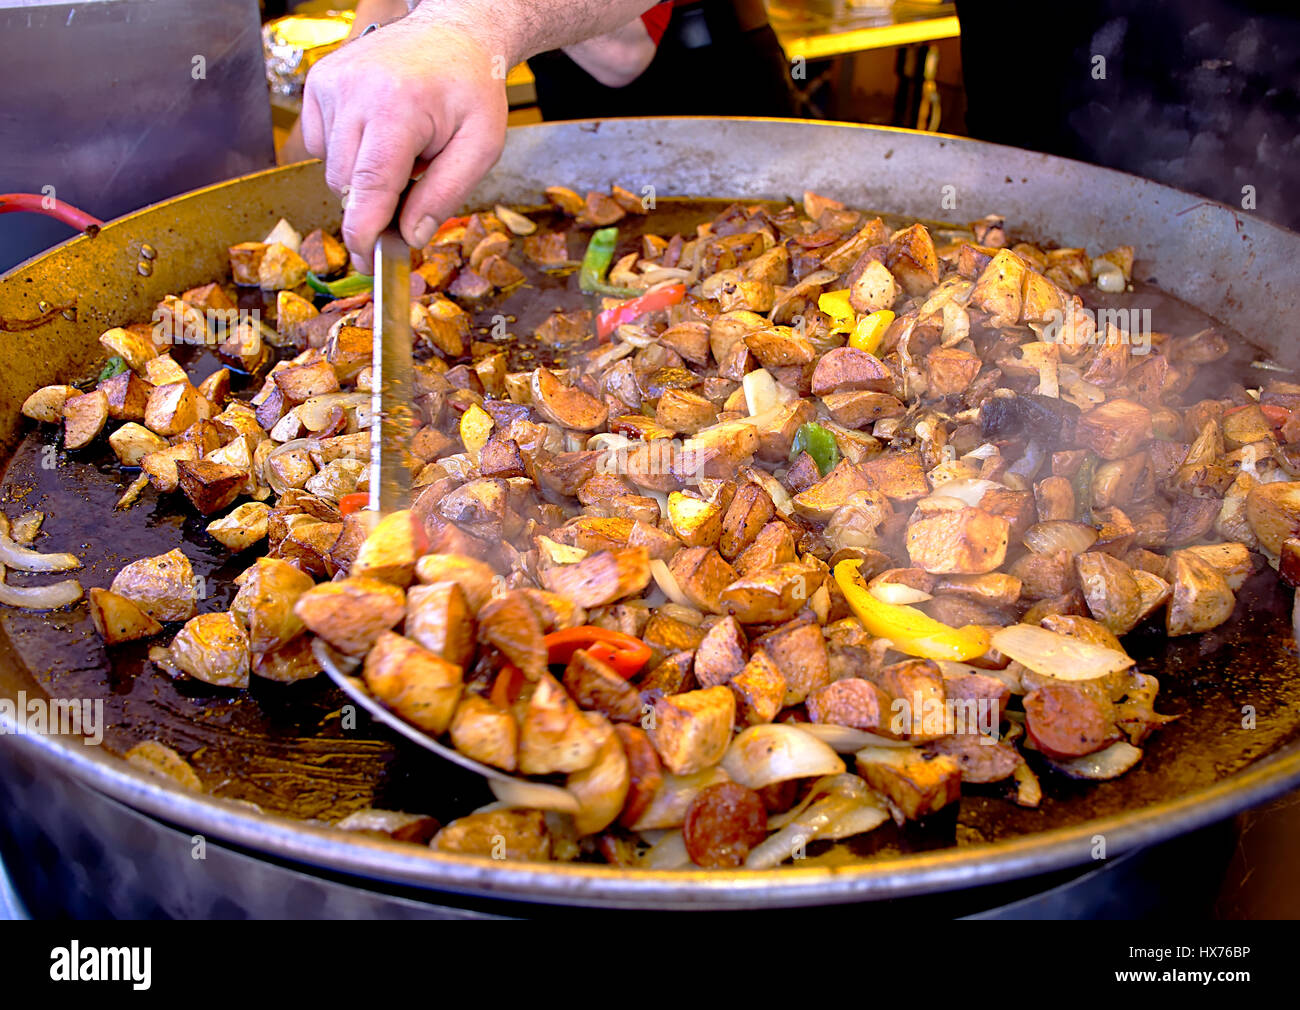 https://c8.alamy.com/comp/HX76BP/chef-hand-cooking-spanish-food-meal-on-big-pan-on-street-market-in-HX76BP.jpg